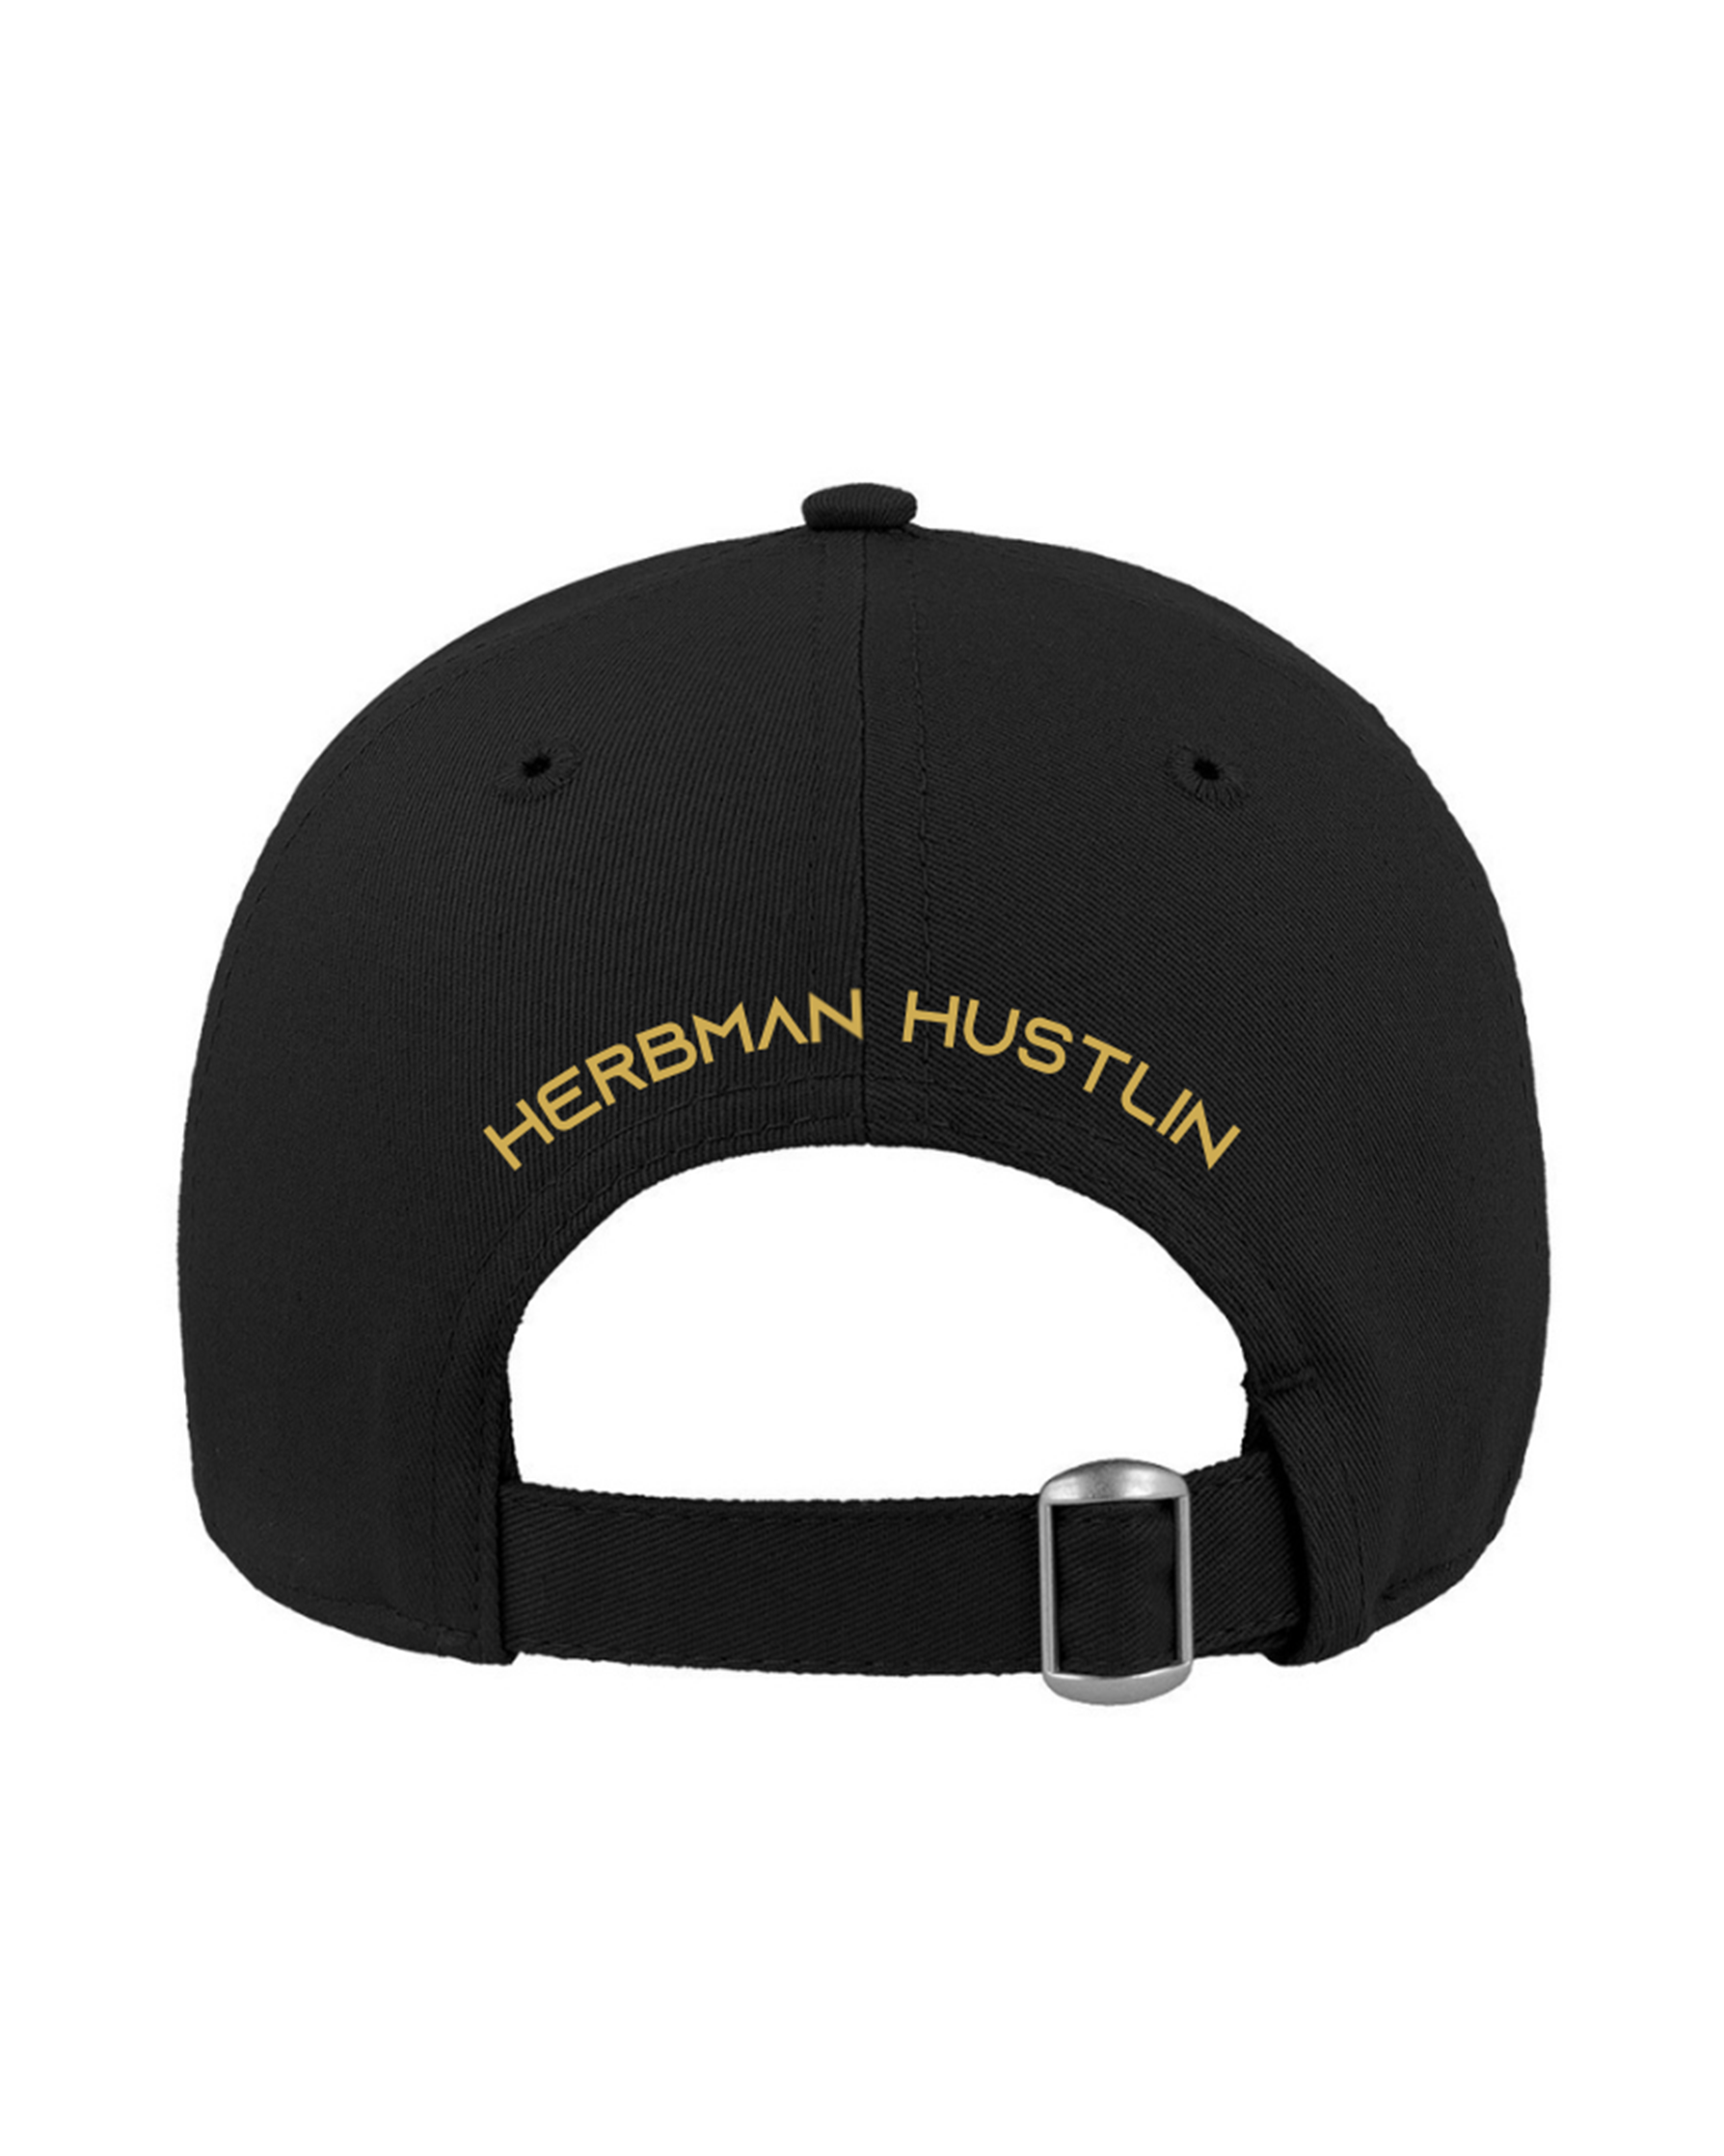 Herbman Hustlin 24k Monogram Cap - Black/Metallic Gold